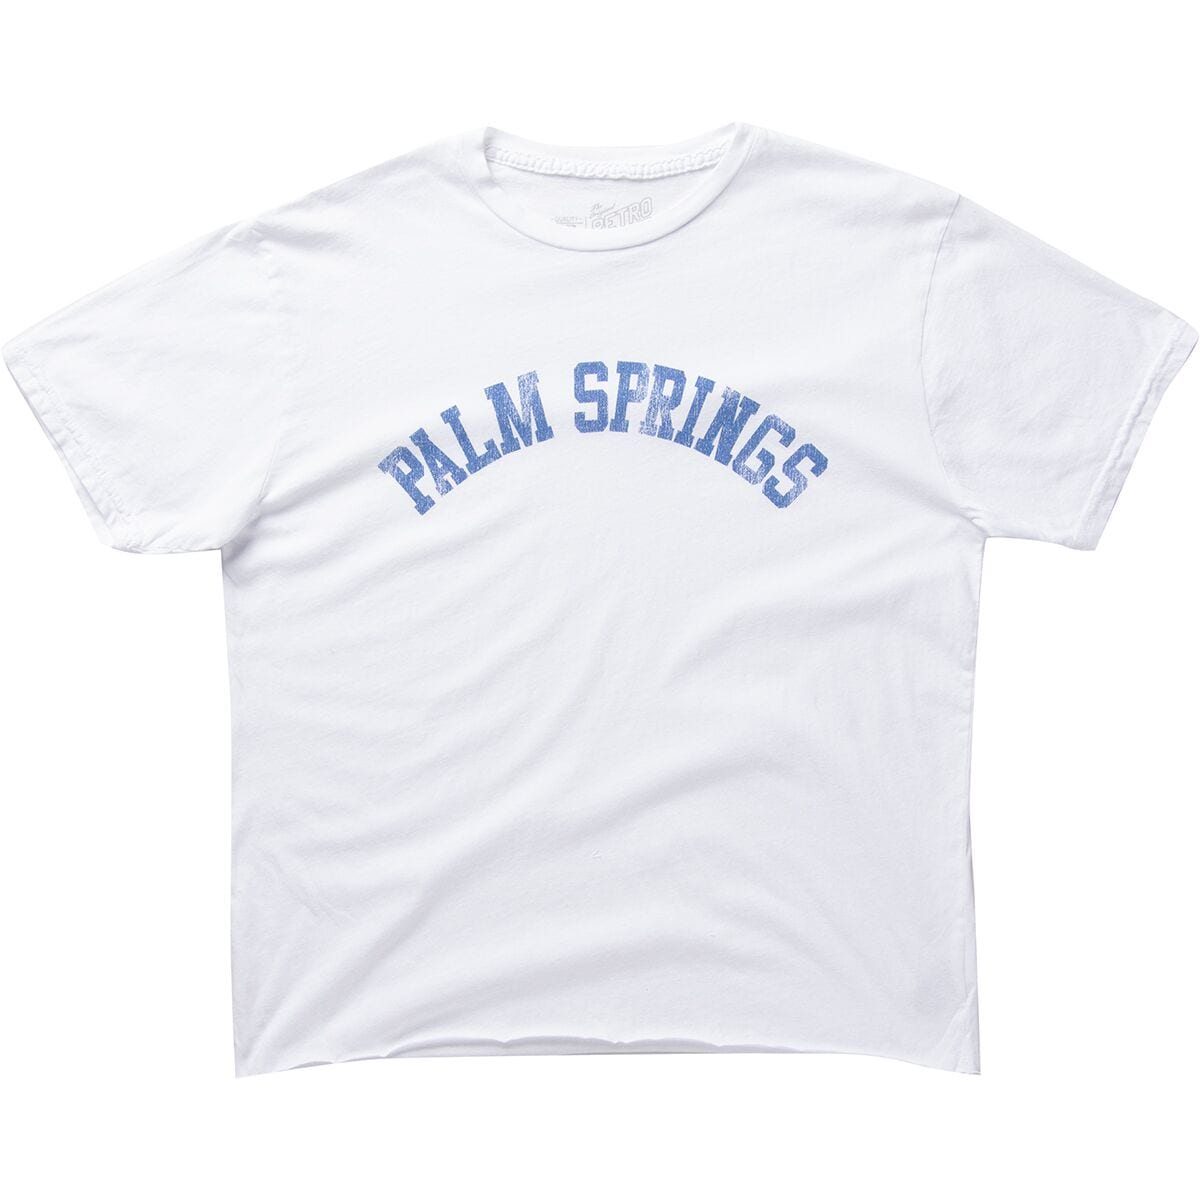 цена Рубашка палм-спрингс Original Retro Brand, белый